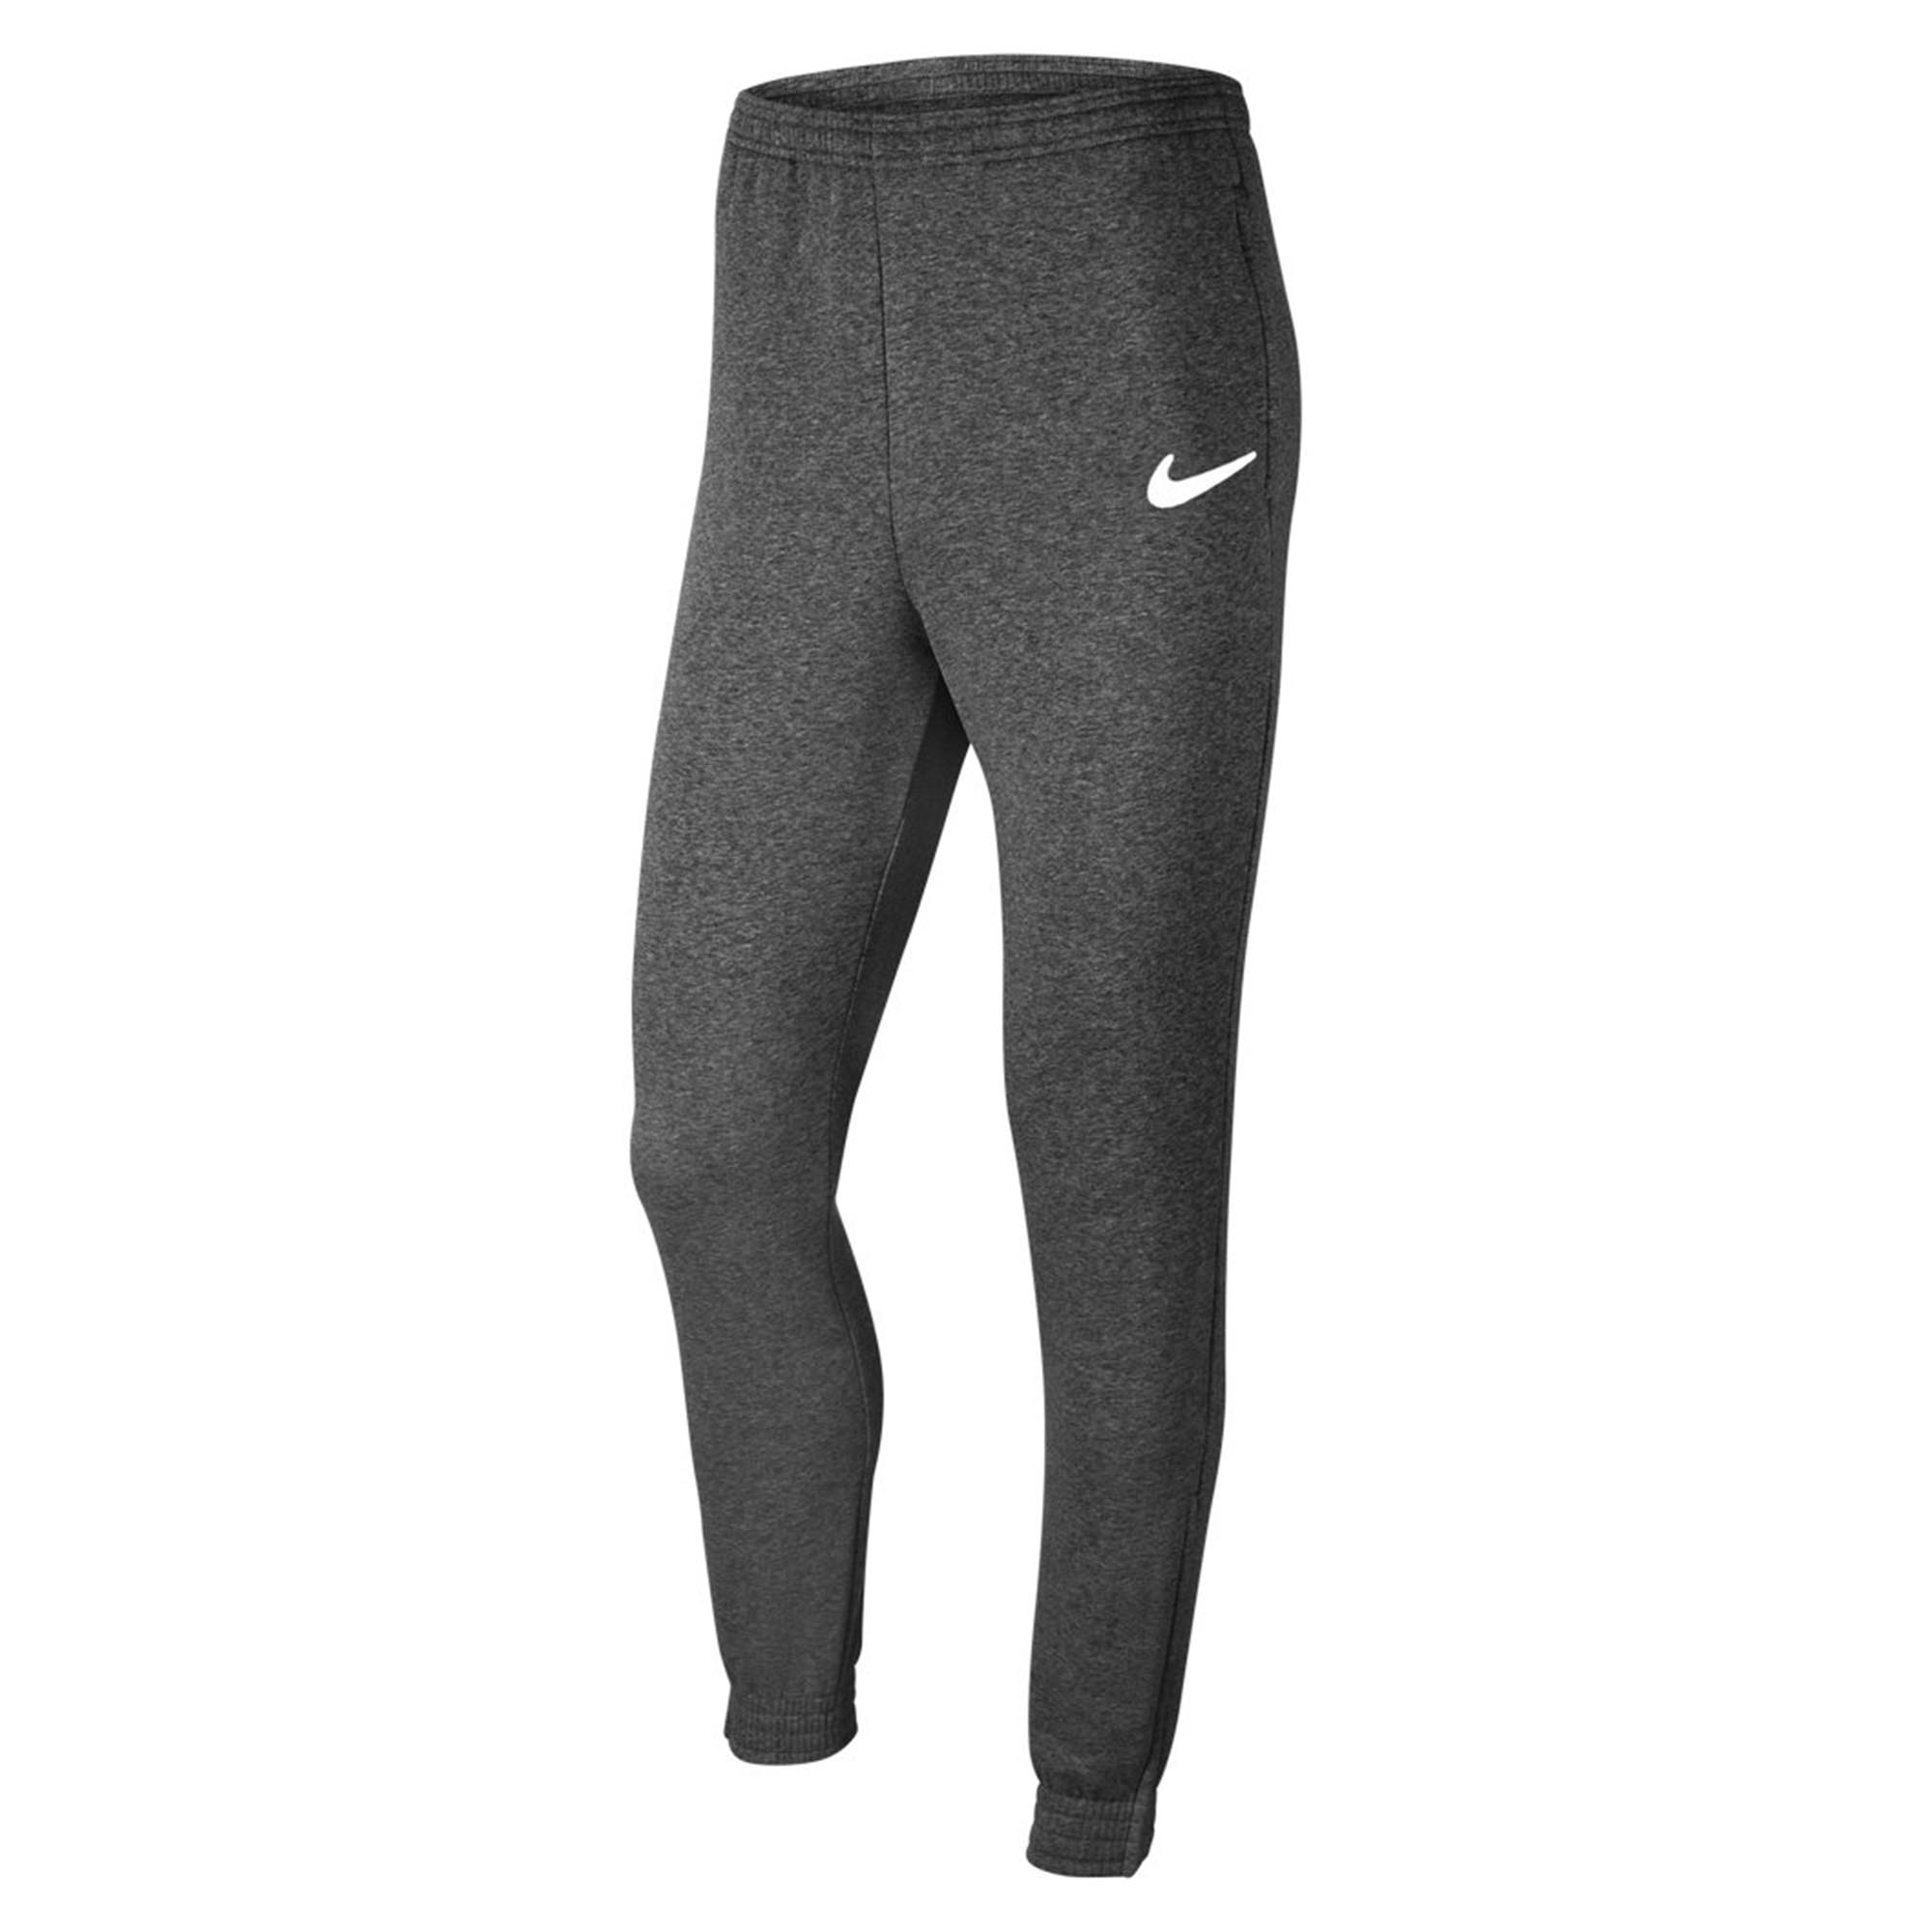 Nike Herren Trainingshose TEAM CLUB 20 Pants grau Jogginghose